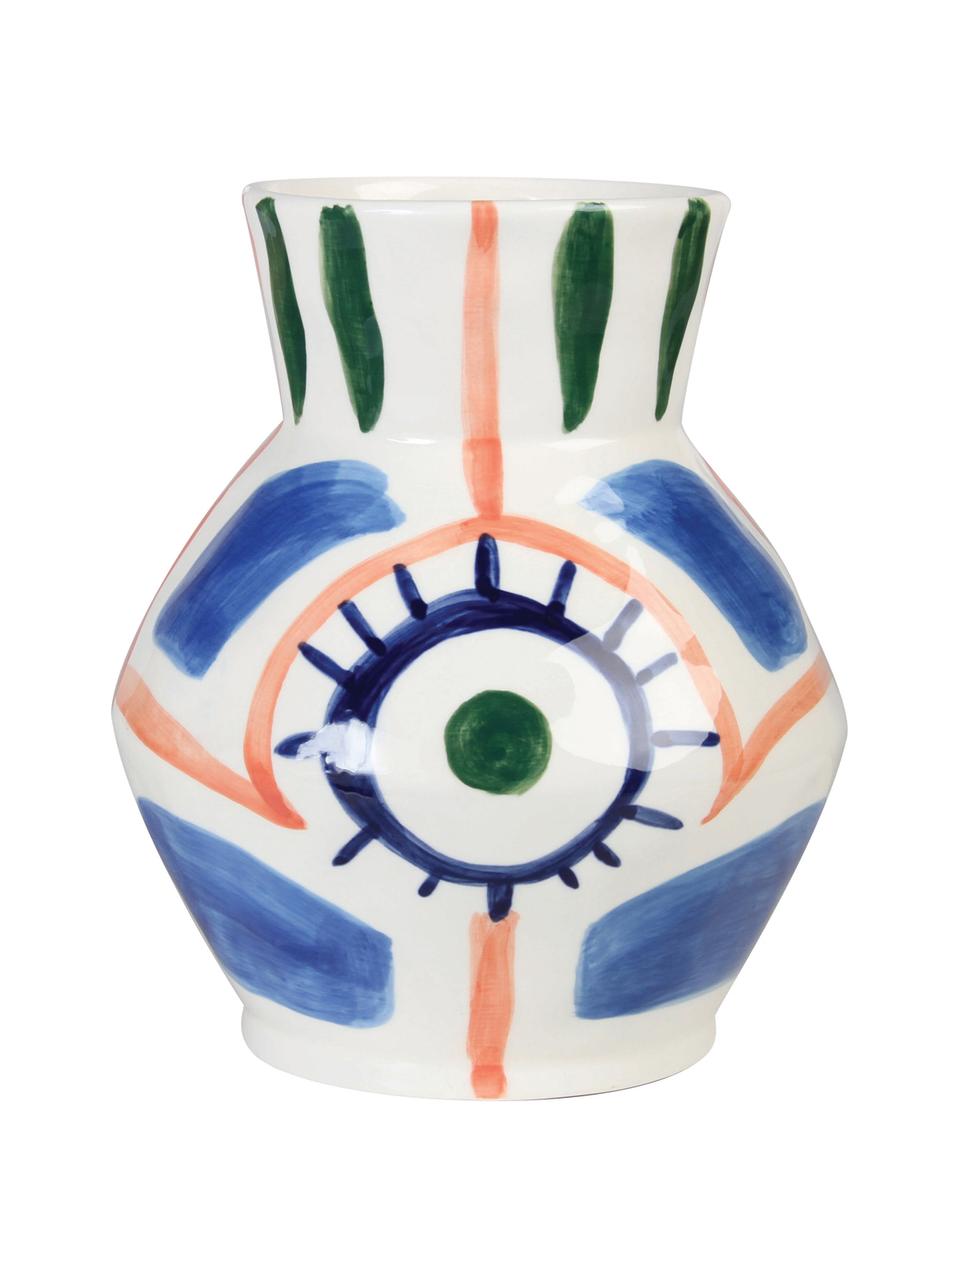 Ručne vyrobená keramická váza Baariq, Biela, modrá, oranžová, zelená